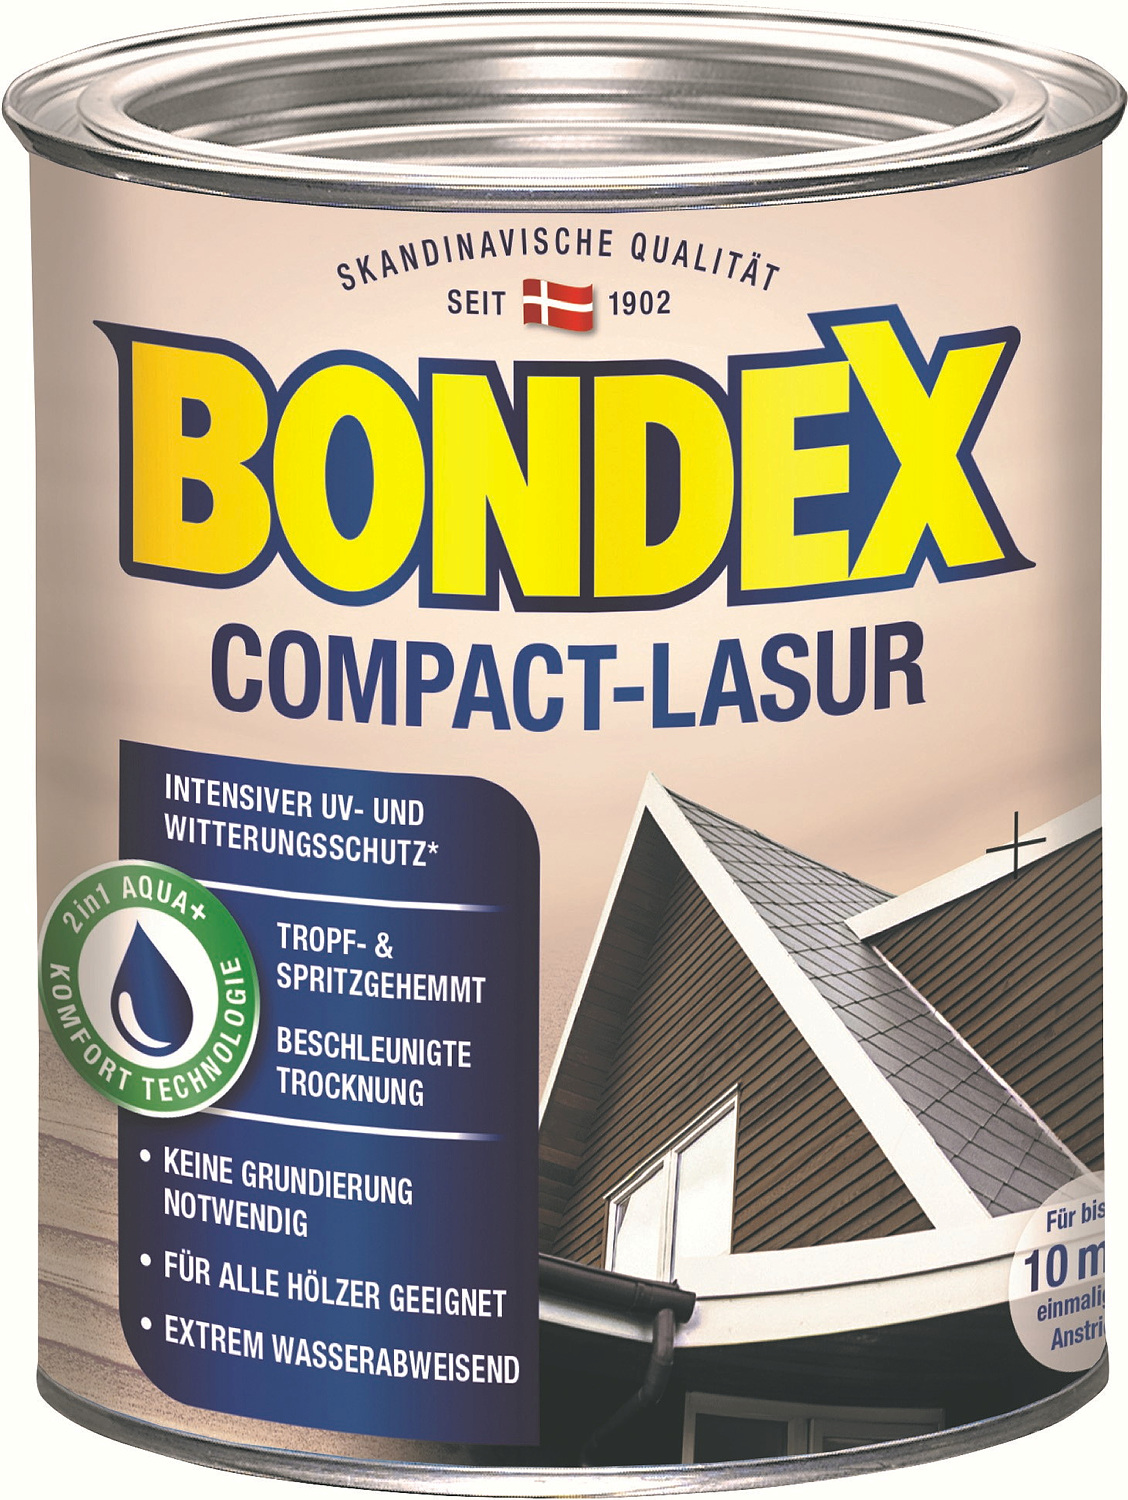 Bondex Compact Lasur Rio Palisander 0,75l